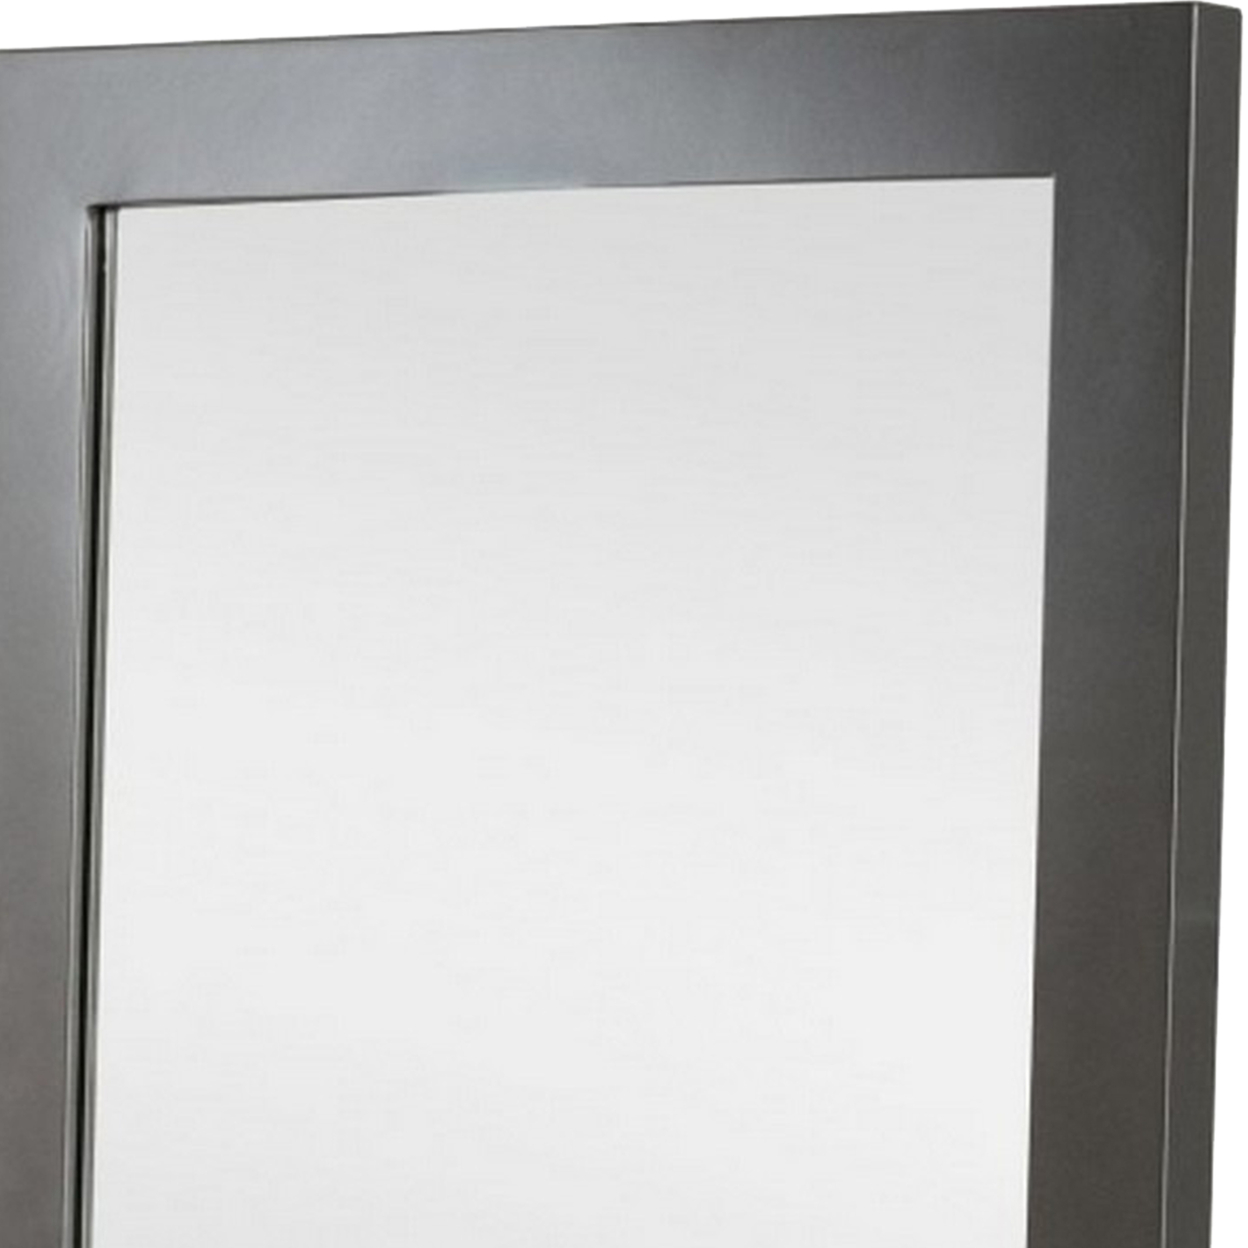 Elongated Wooden Frame Mirror With Matte Look, Gray- Saltoro Sherpi